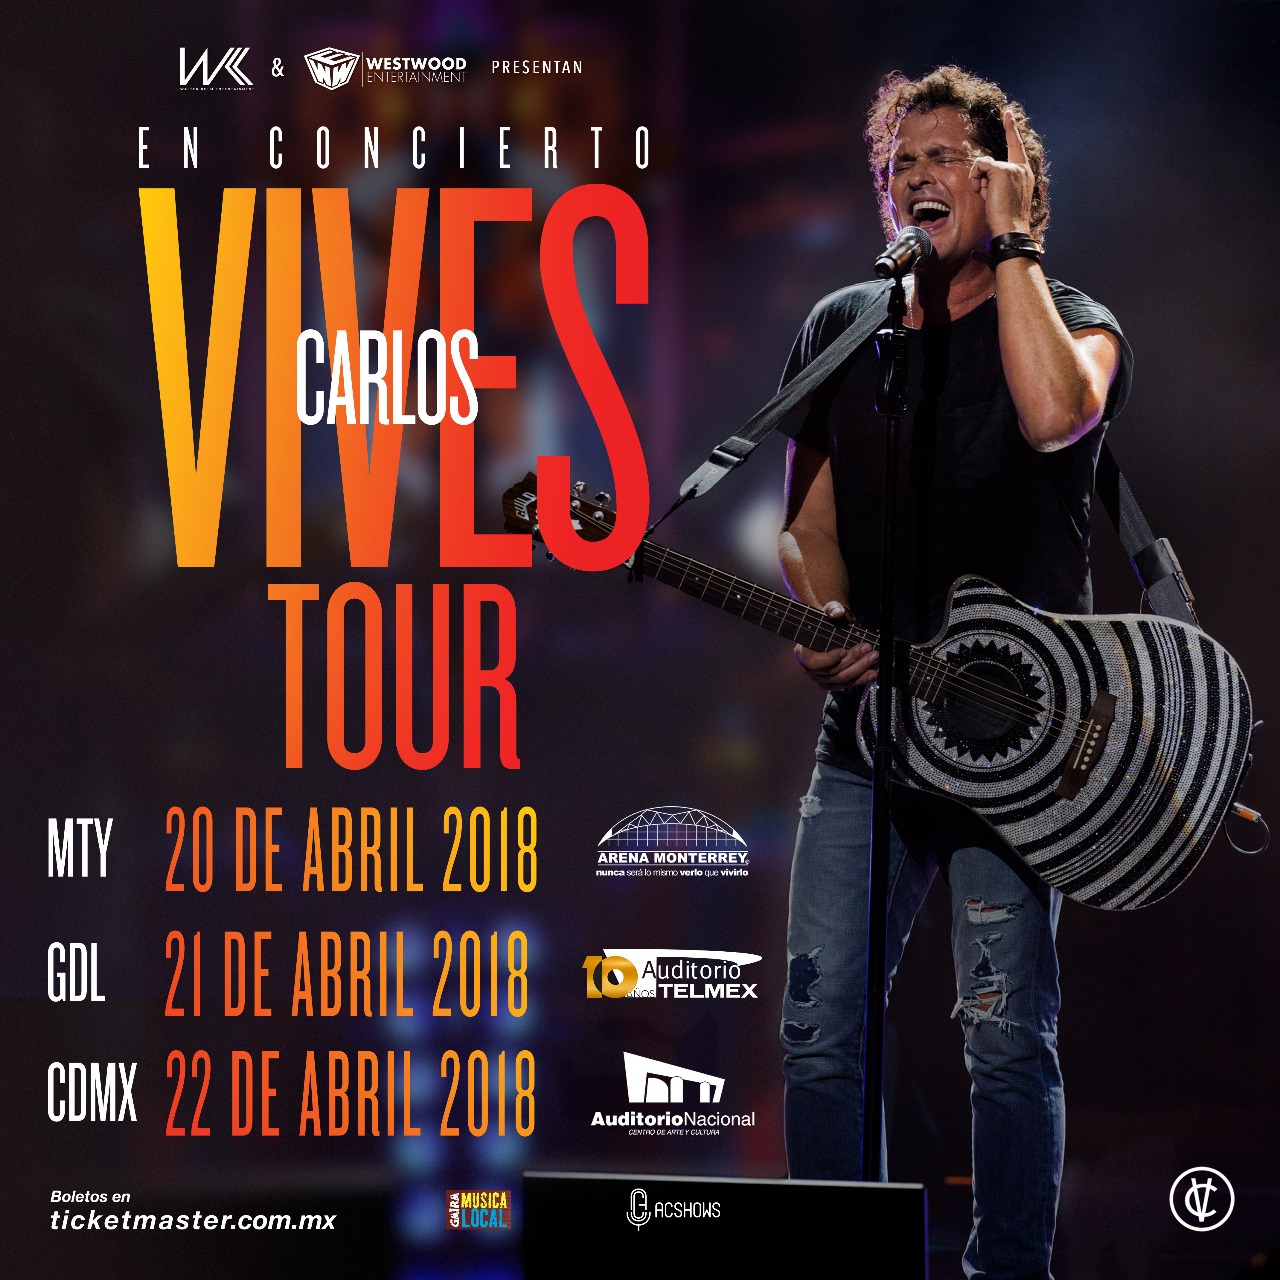 Concierto de Carlos Vives, Vives Tour, en Zapopan, Jalisco, México, Miércoles, 21 de marzo de 2018